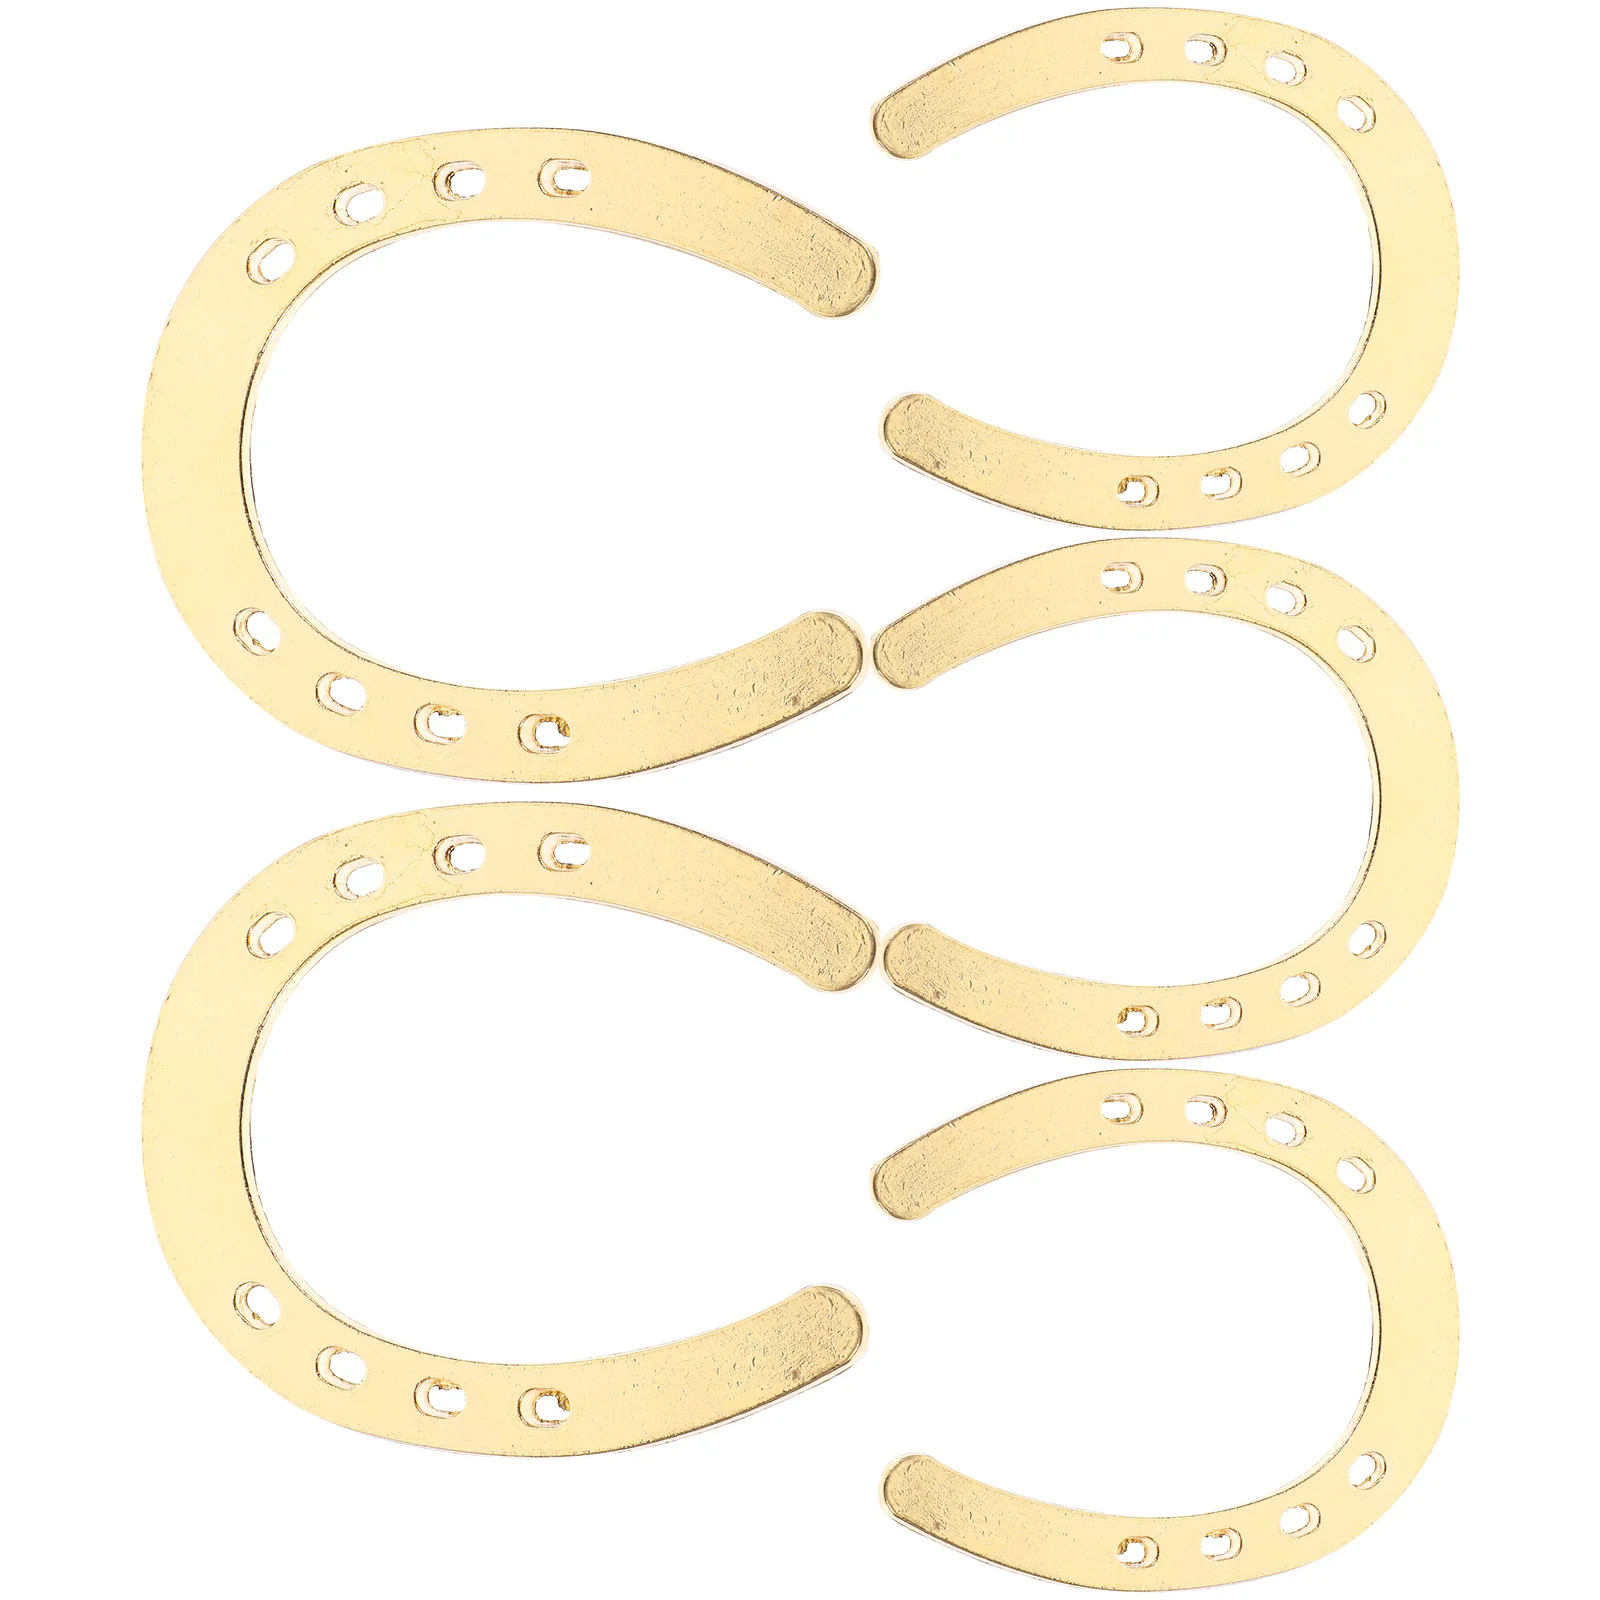 

5 Pcs Automotivearts & Crafts Keys Ring Supplies Horseshoe Decor DIY Rings Decors Metal Attachment Car Chain Pendant Decorate